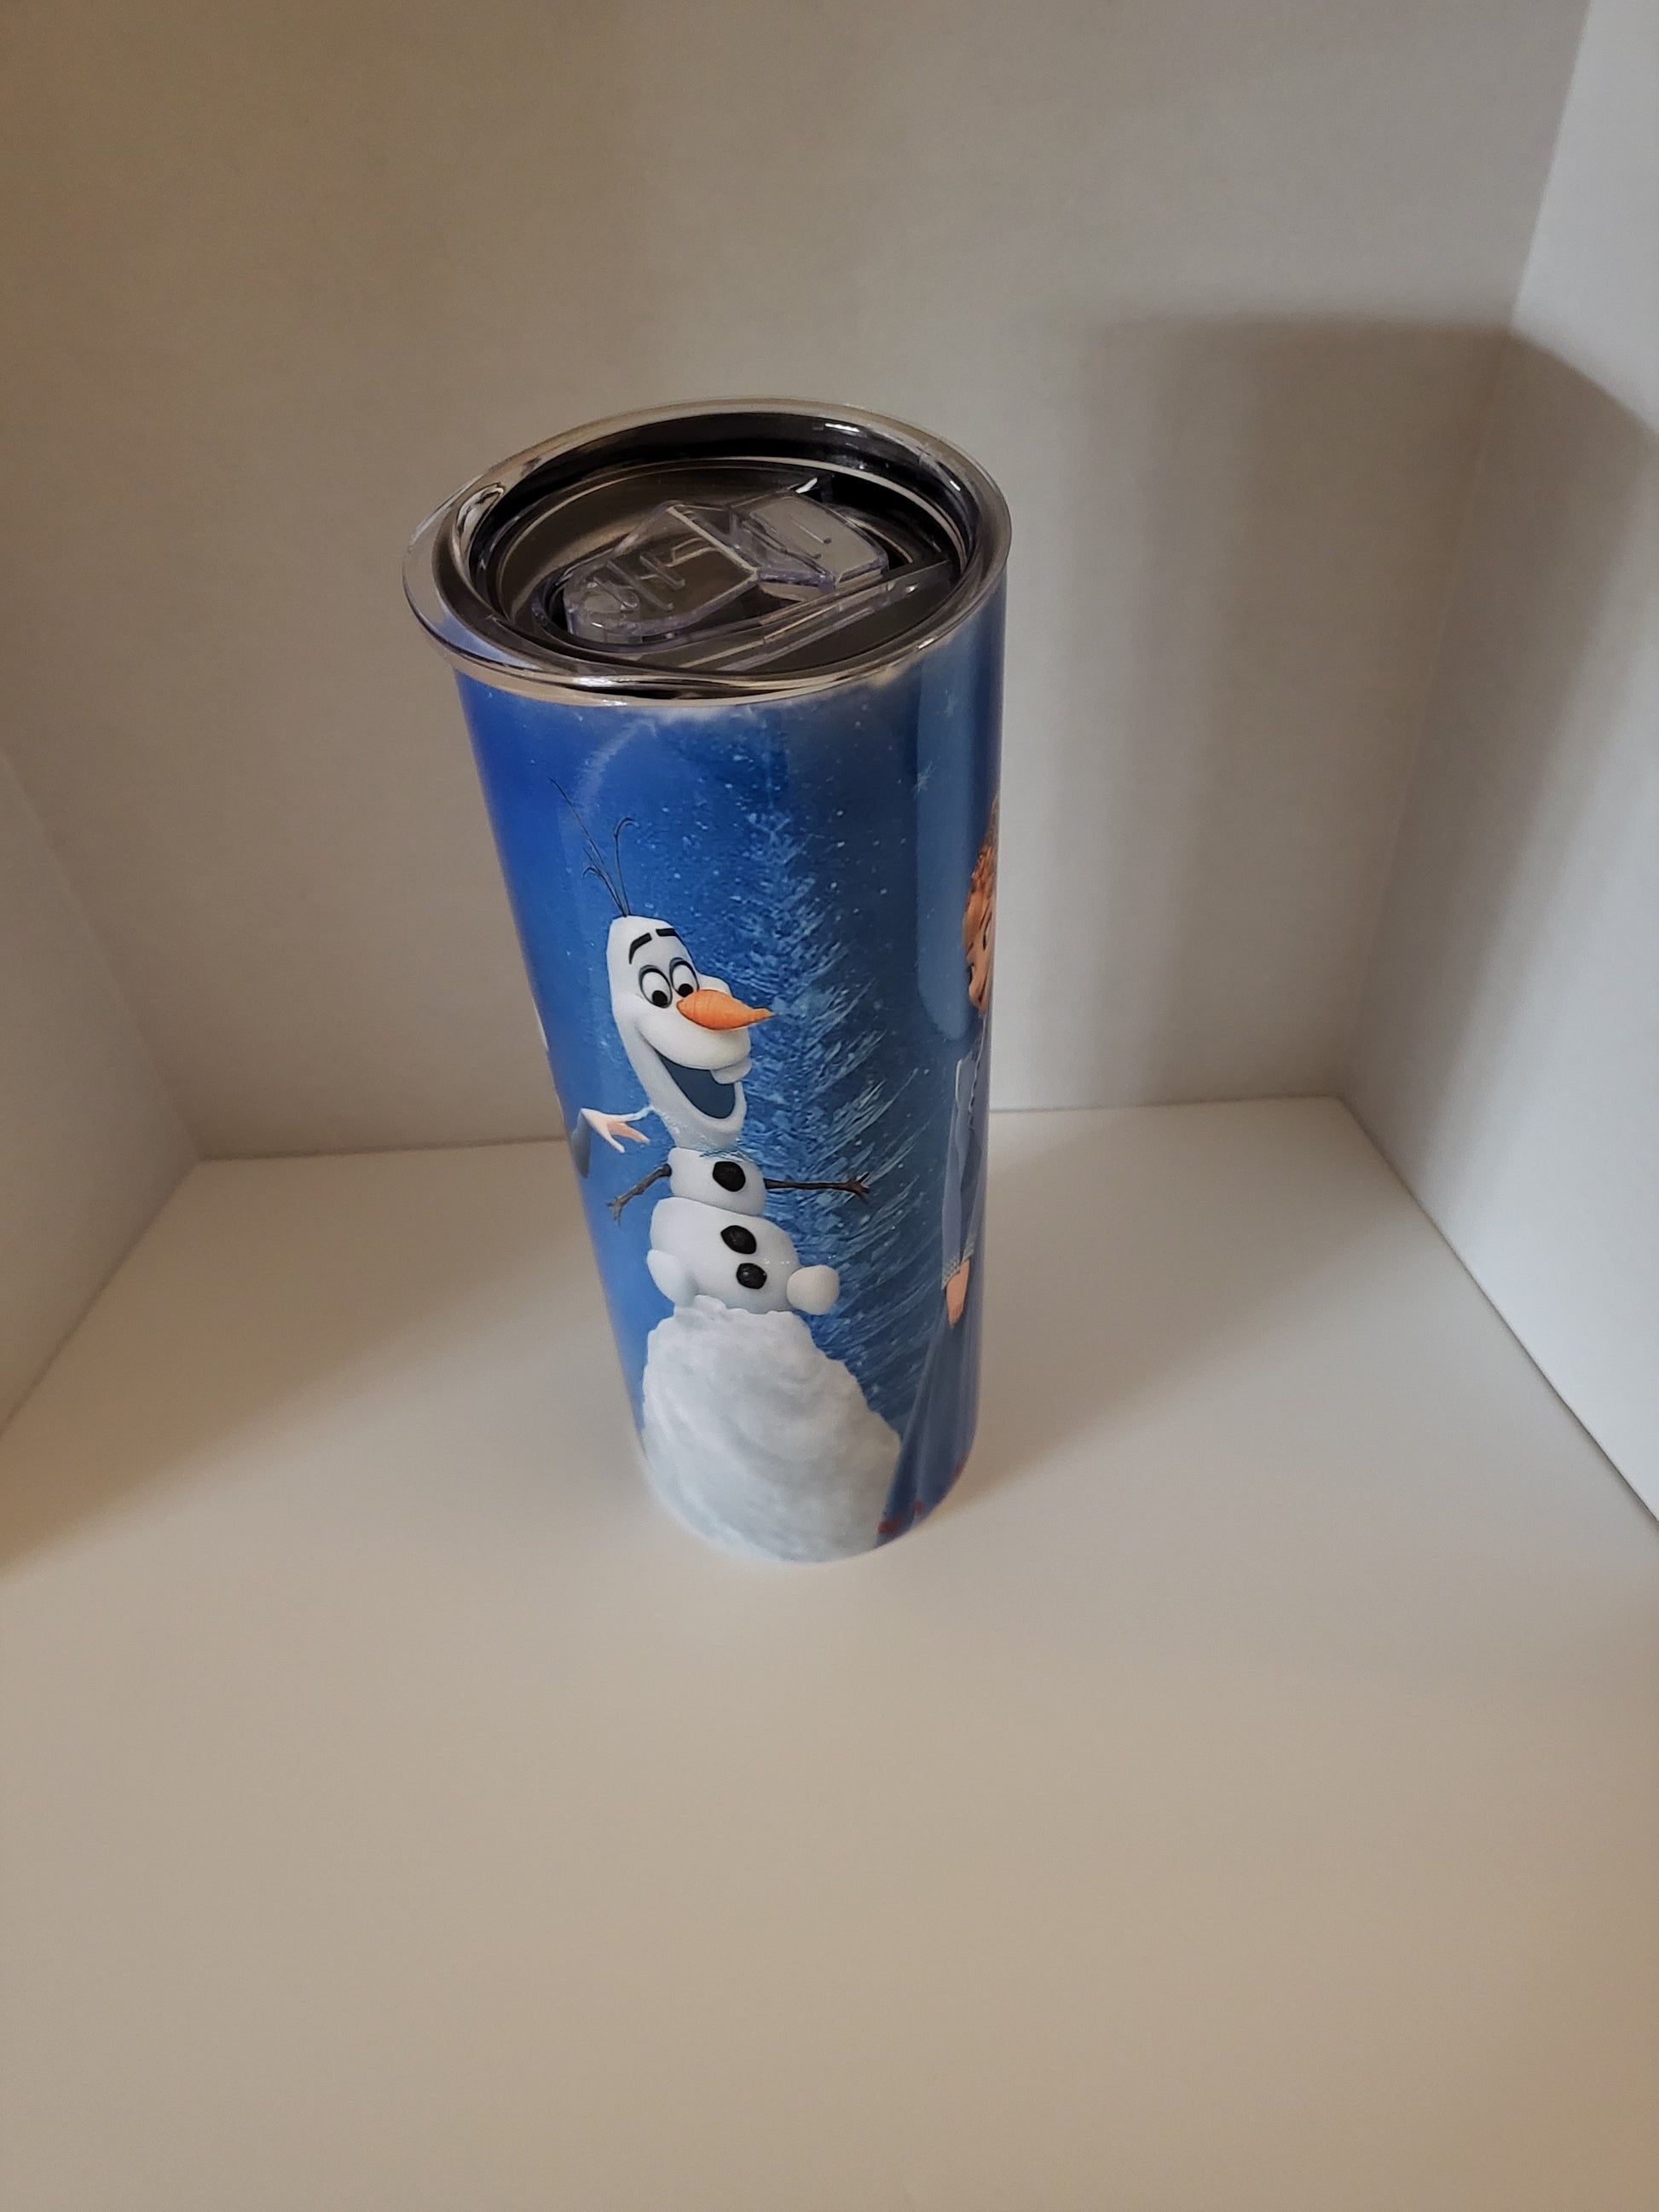 Disney's Frozen II Olaf Cup with Straw